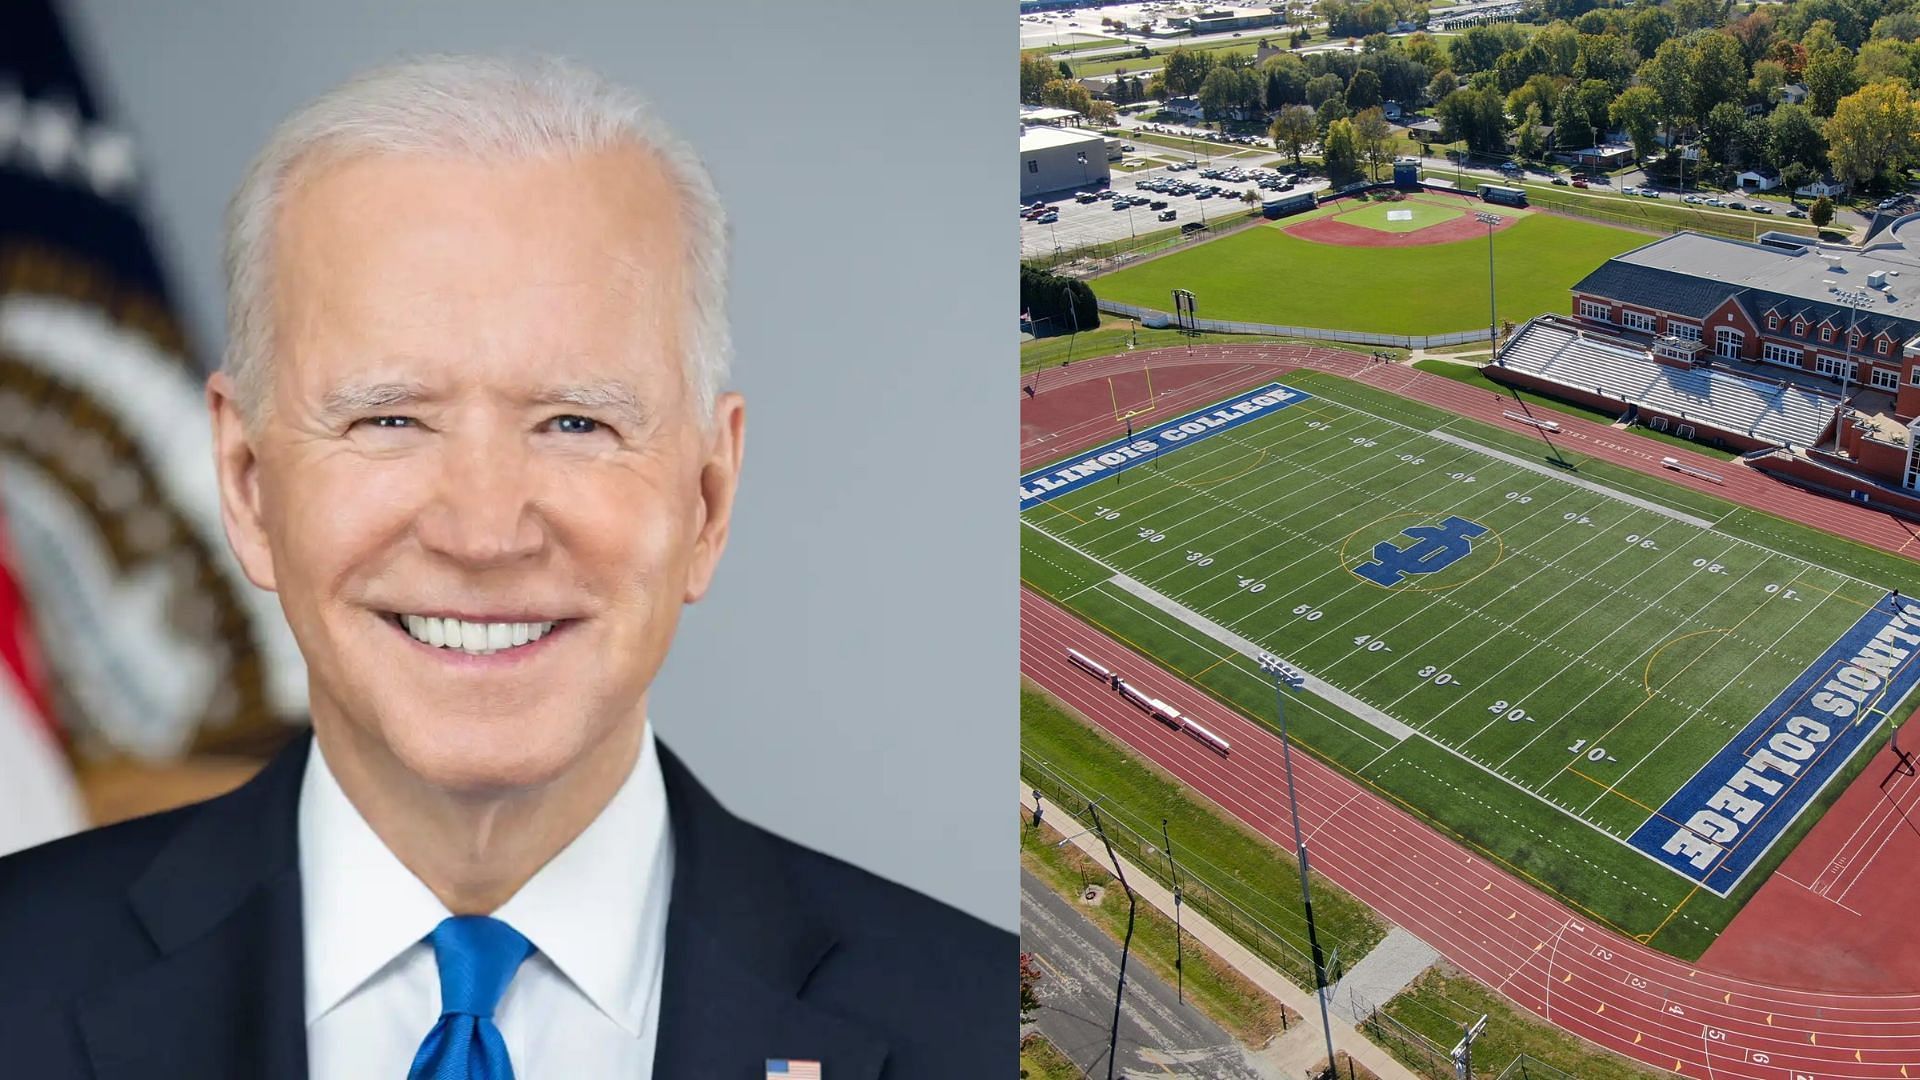 Did Joe Biden play college football at Delaware?